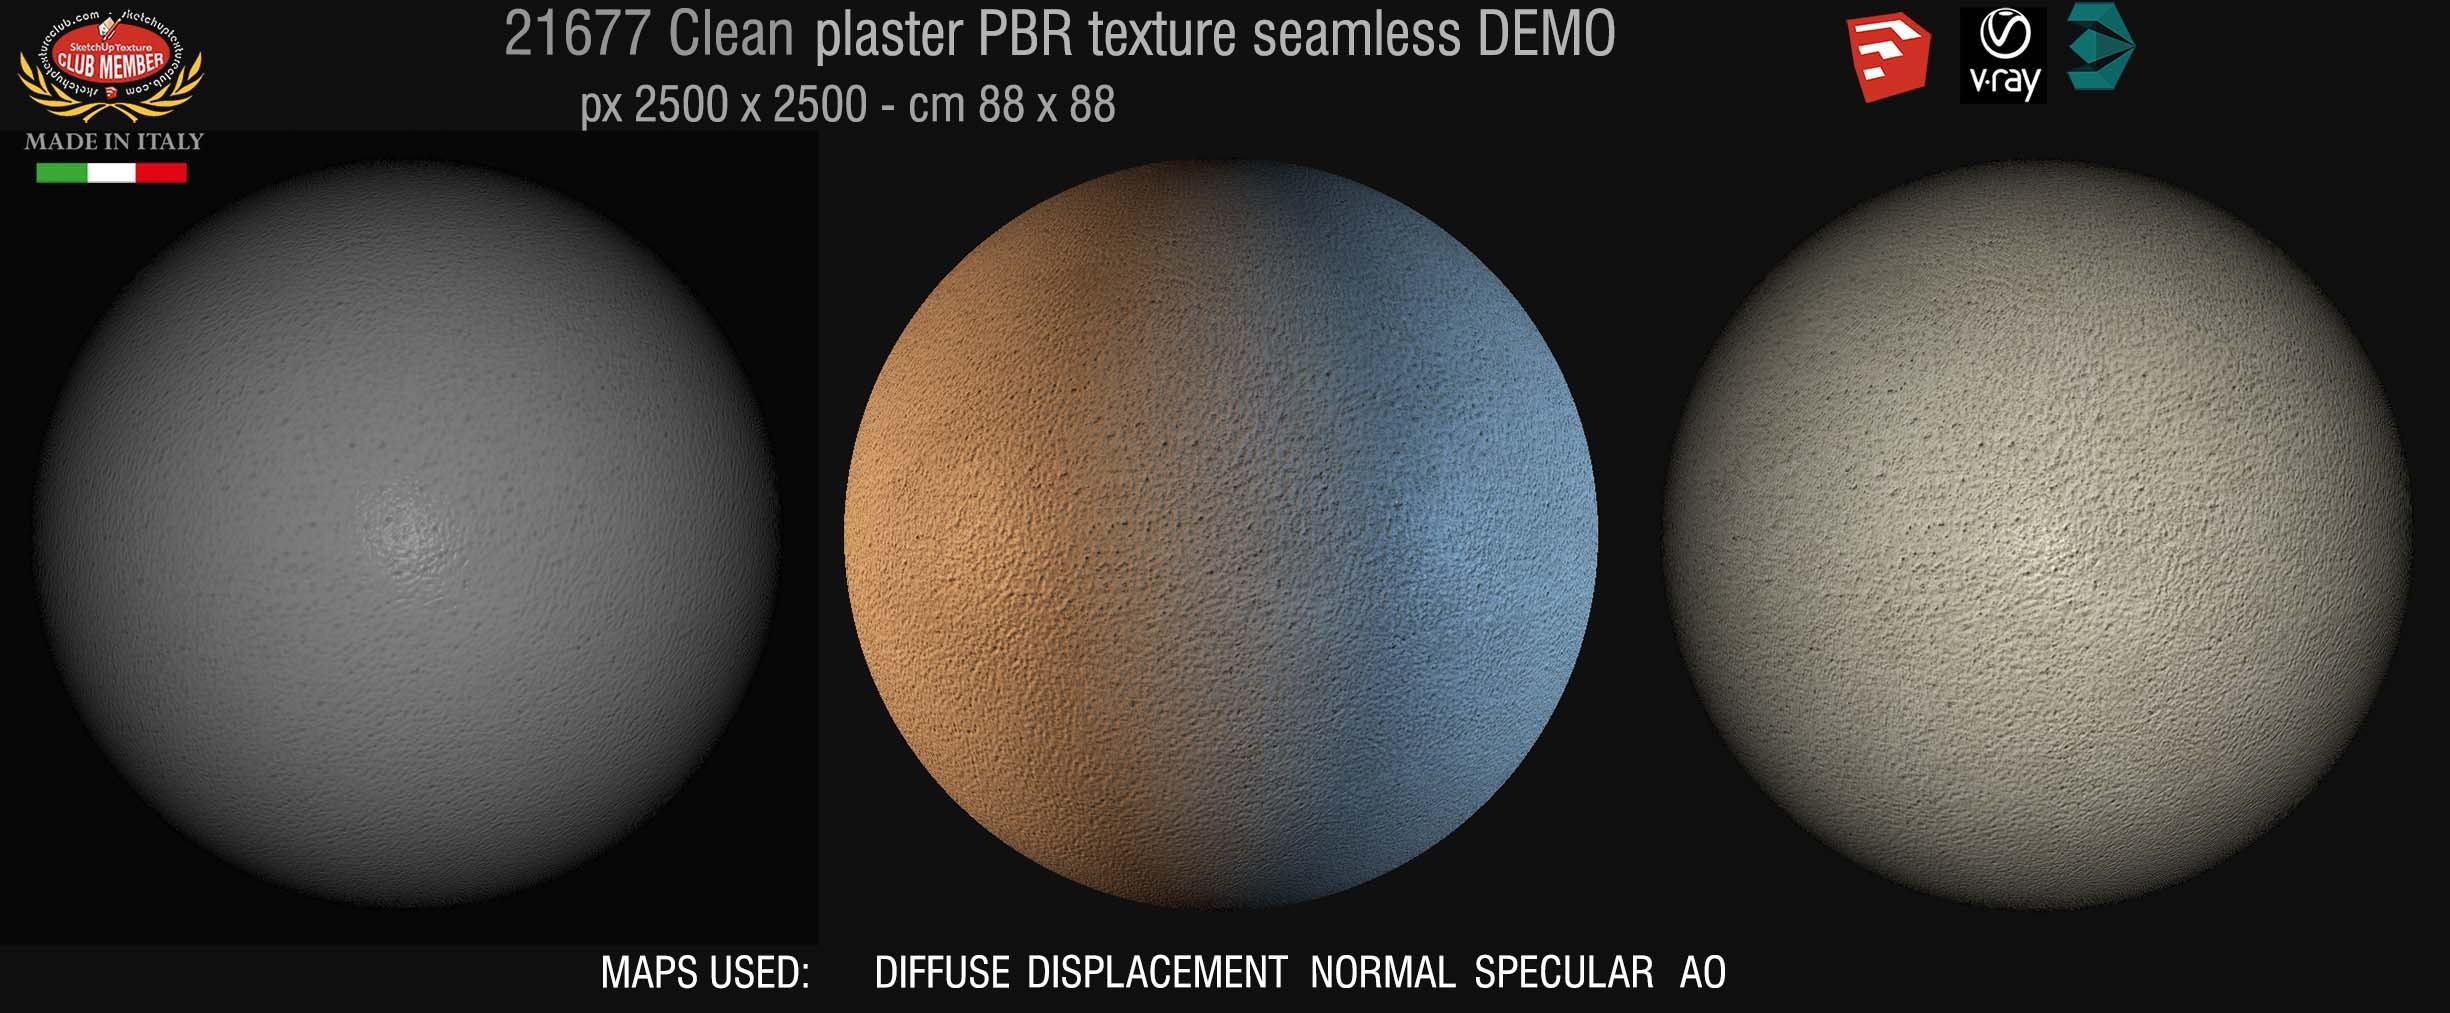 21677 clean plaster PBR texture seamless DEMO